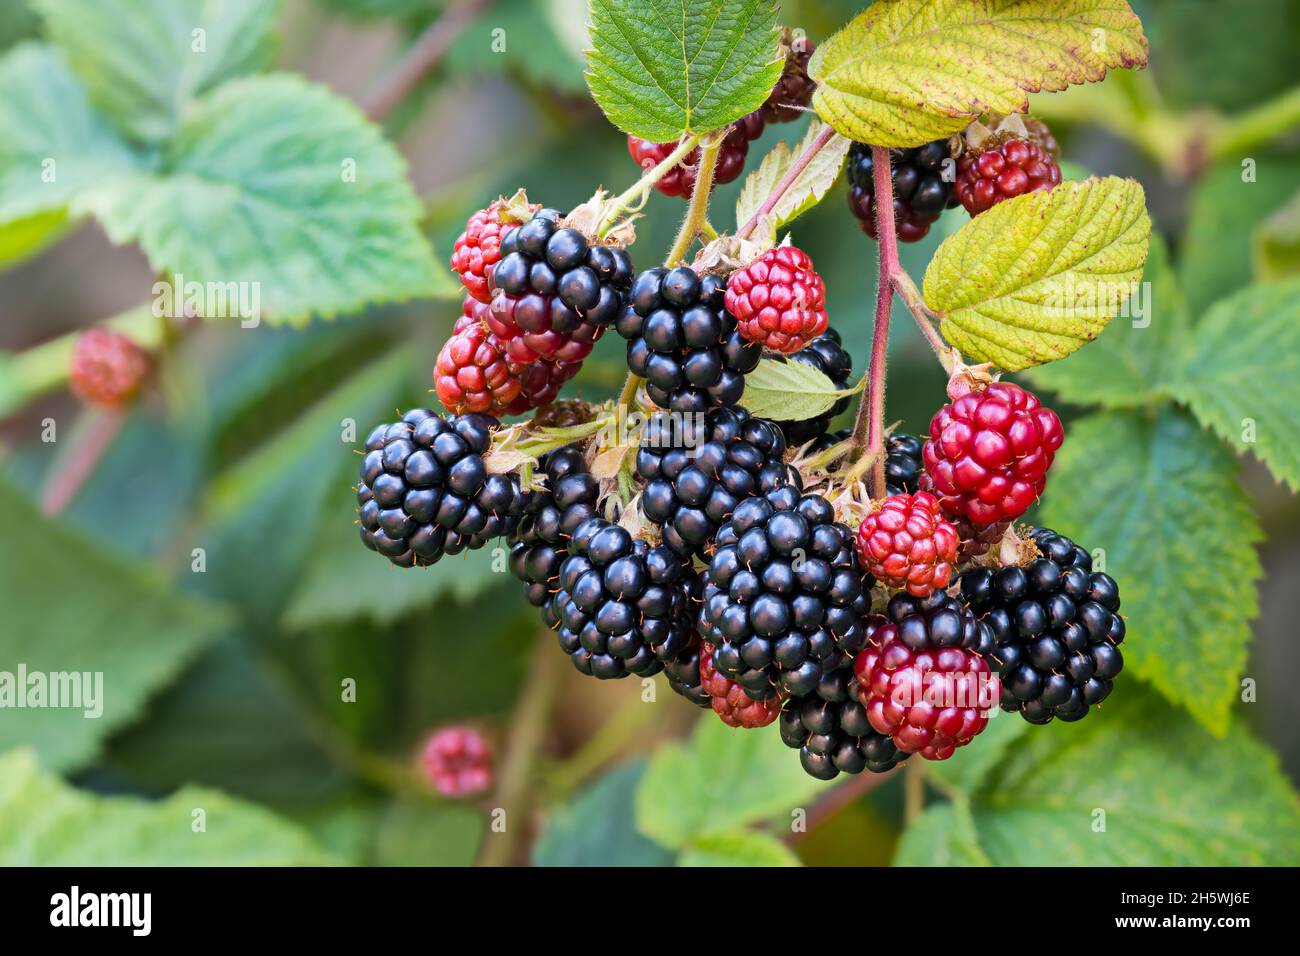 https://c8.alamy.com/comp/2H5WJ6E/black-ripe-and-red-ripening-blackberries-on-green-leaves-background-rubus-fruticosus-closeup-of-bramble-branch-bunch-of-yummy-sweet-summer-berries-2H5WJ6E.jpg